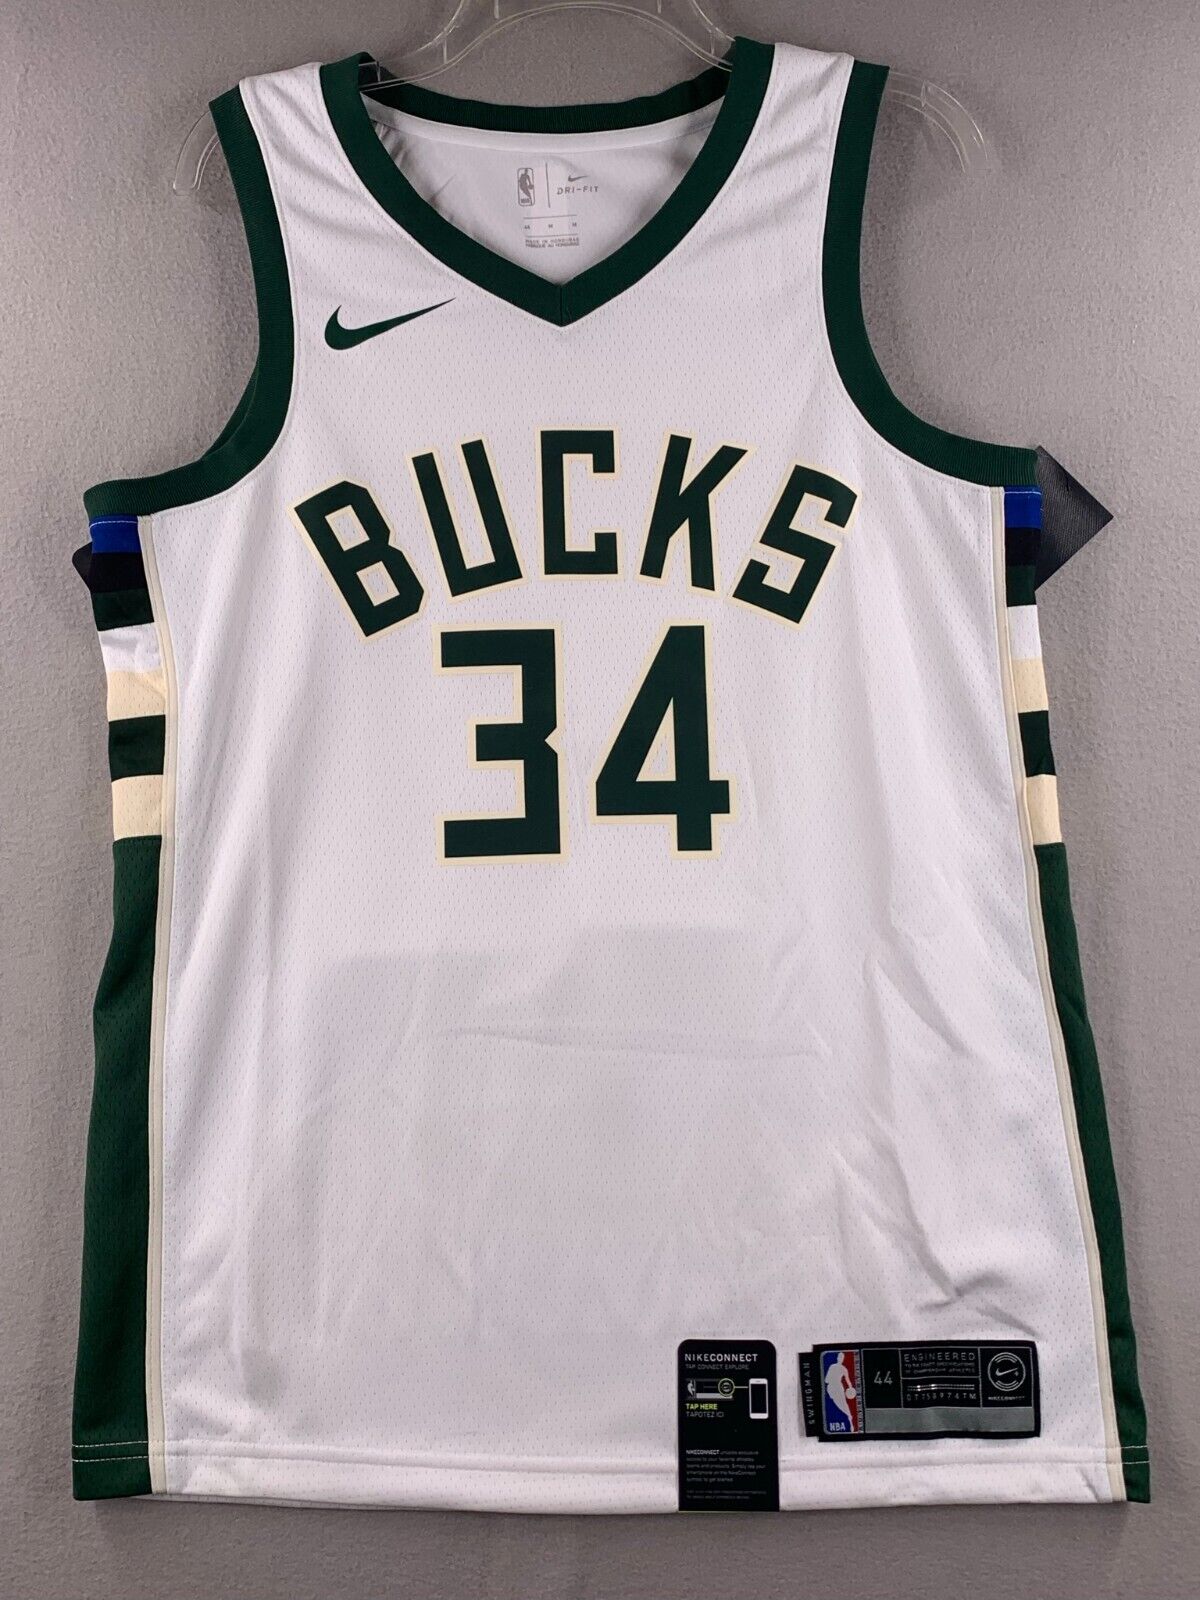 Bucks Nike Association Uniform Photo Gallery